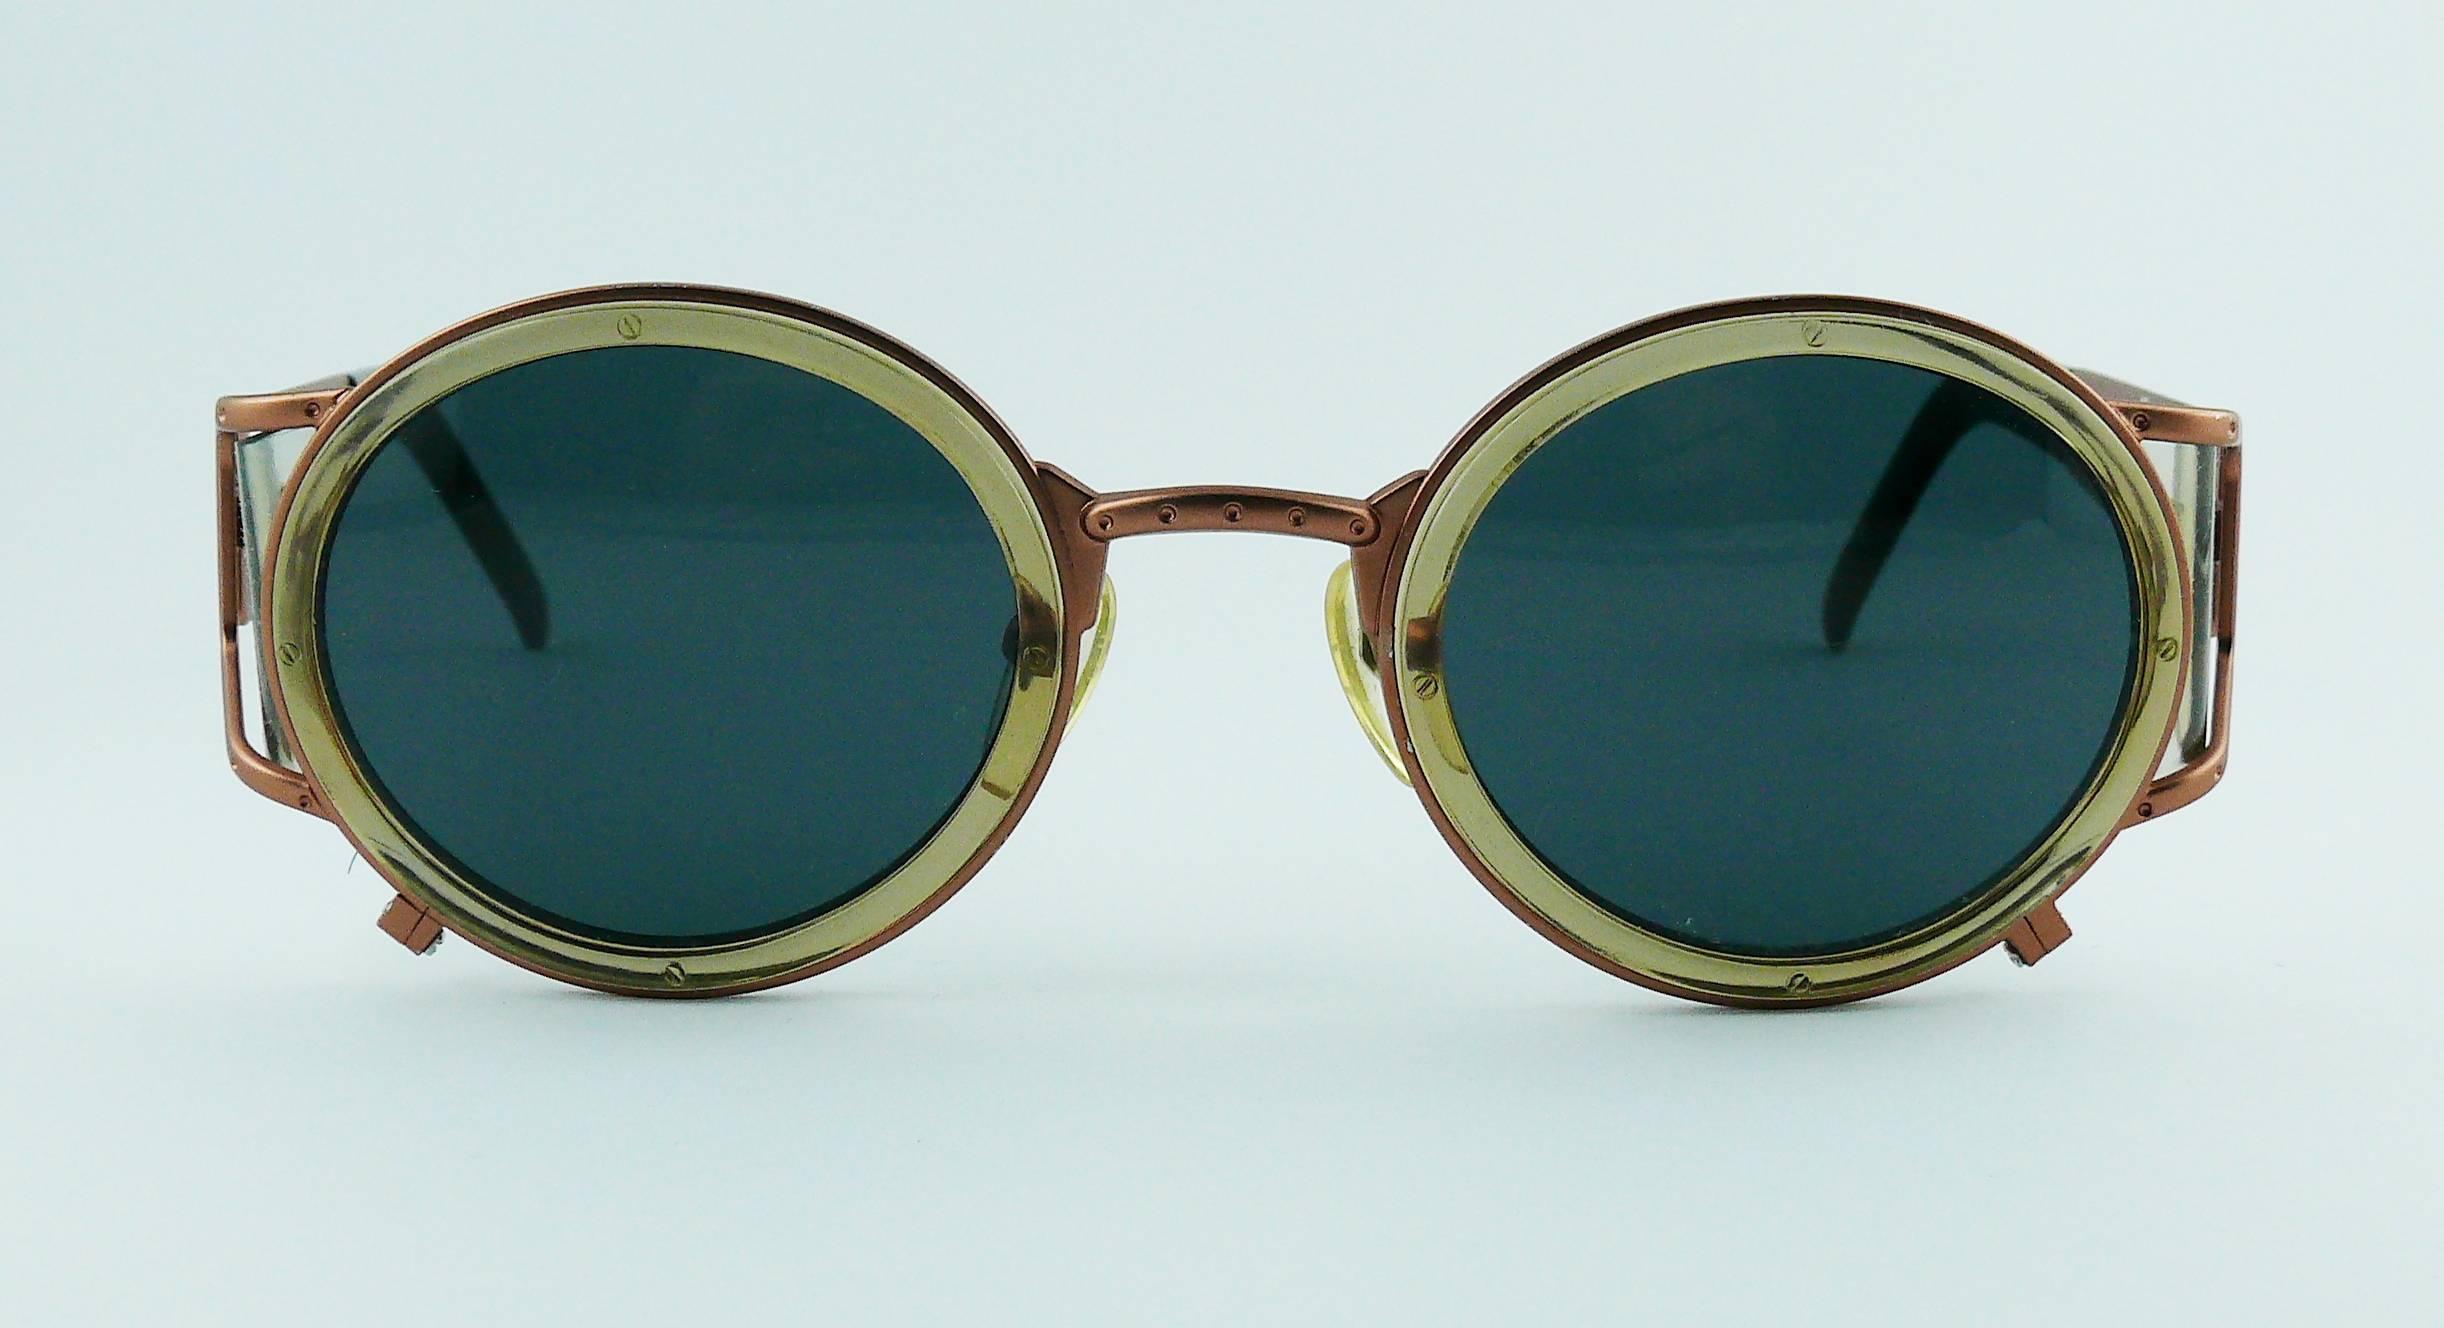 jean paul gaultier sunglasses vintage